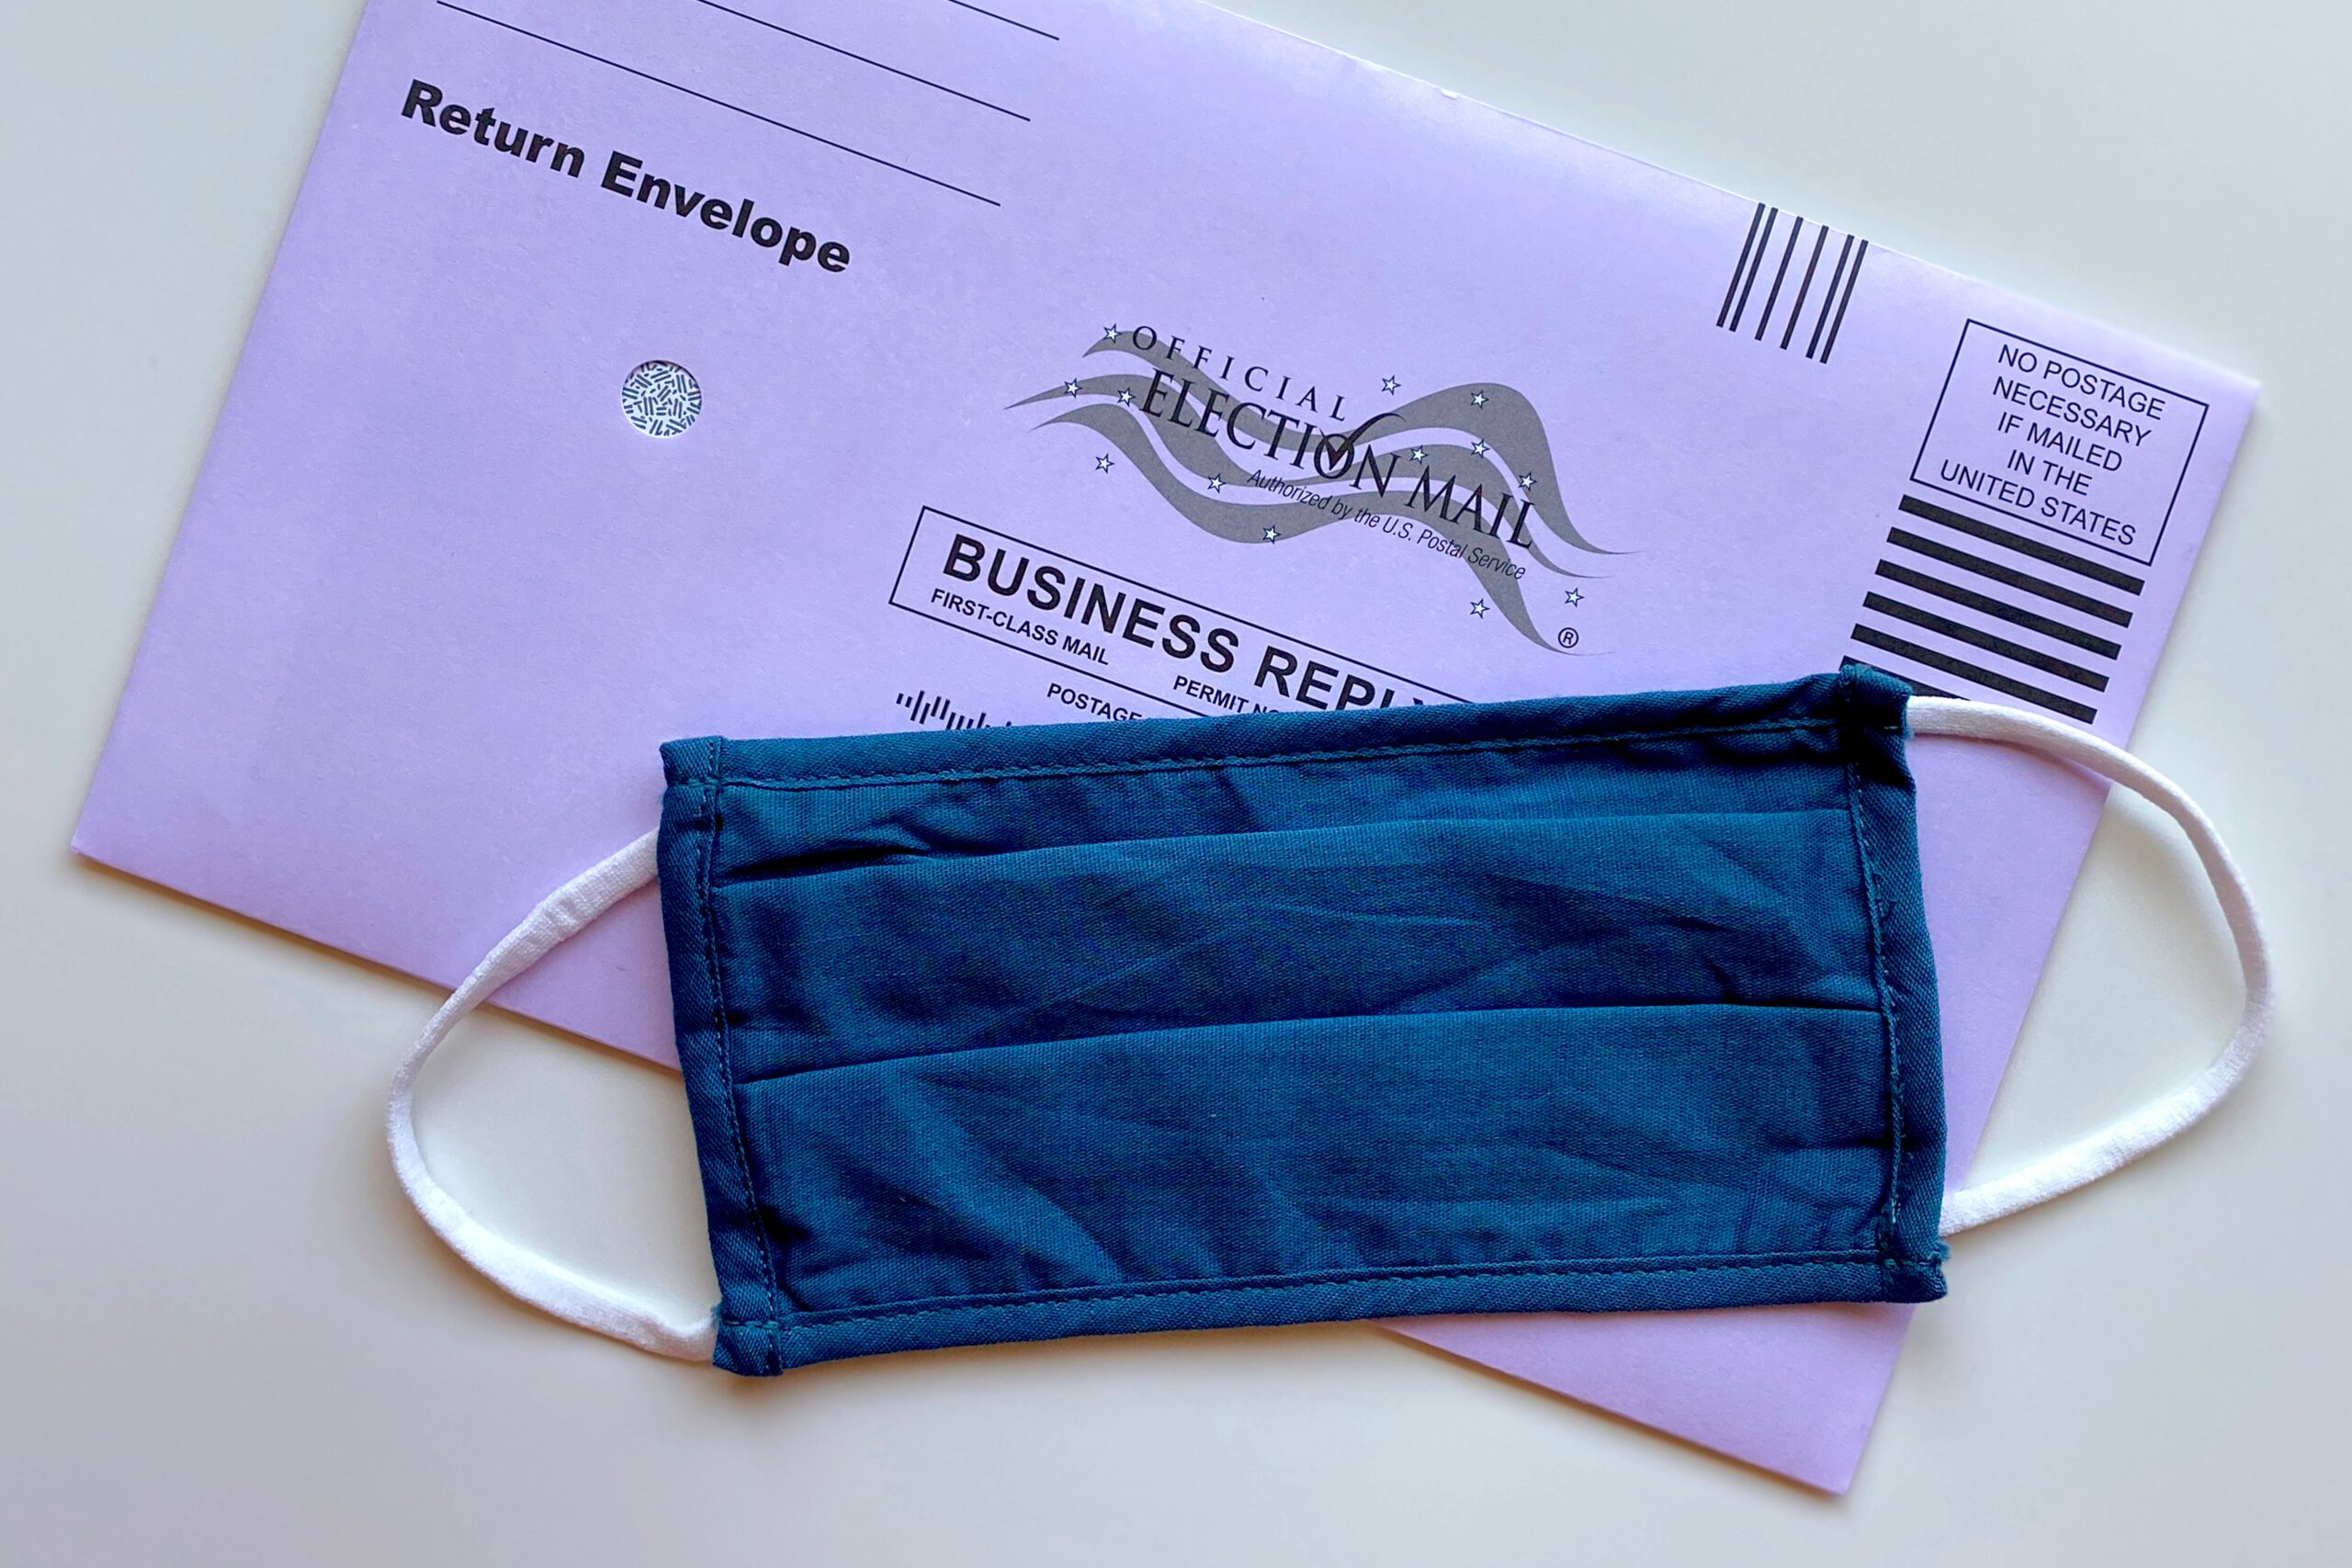 Arizona is prepared to handle mail-in ballots